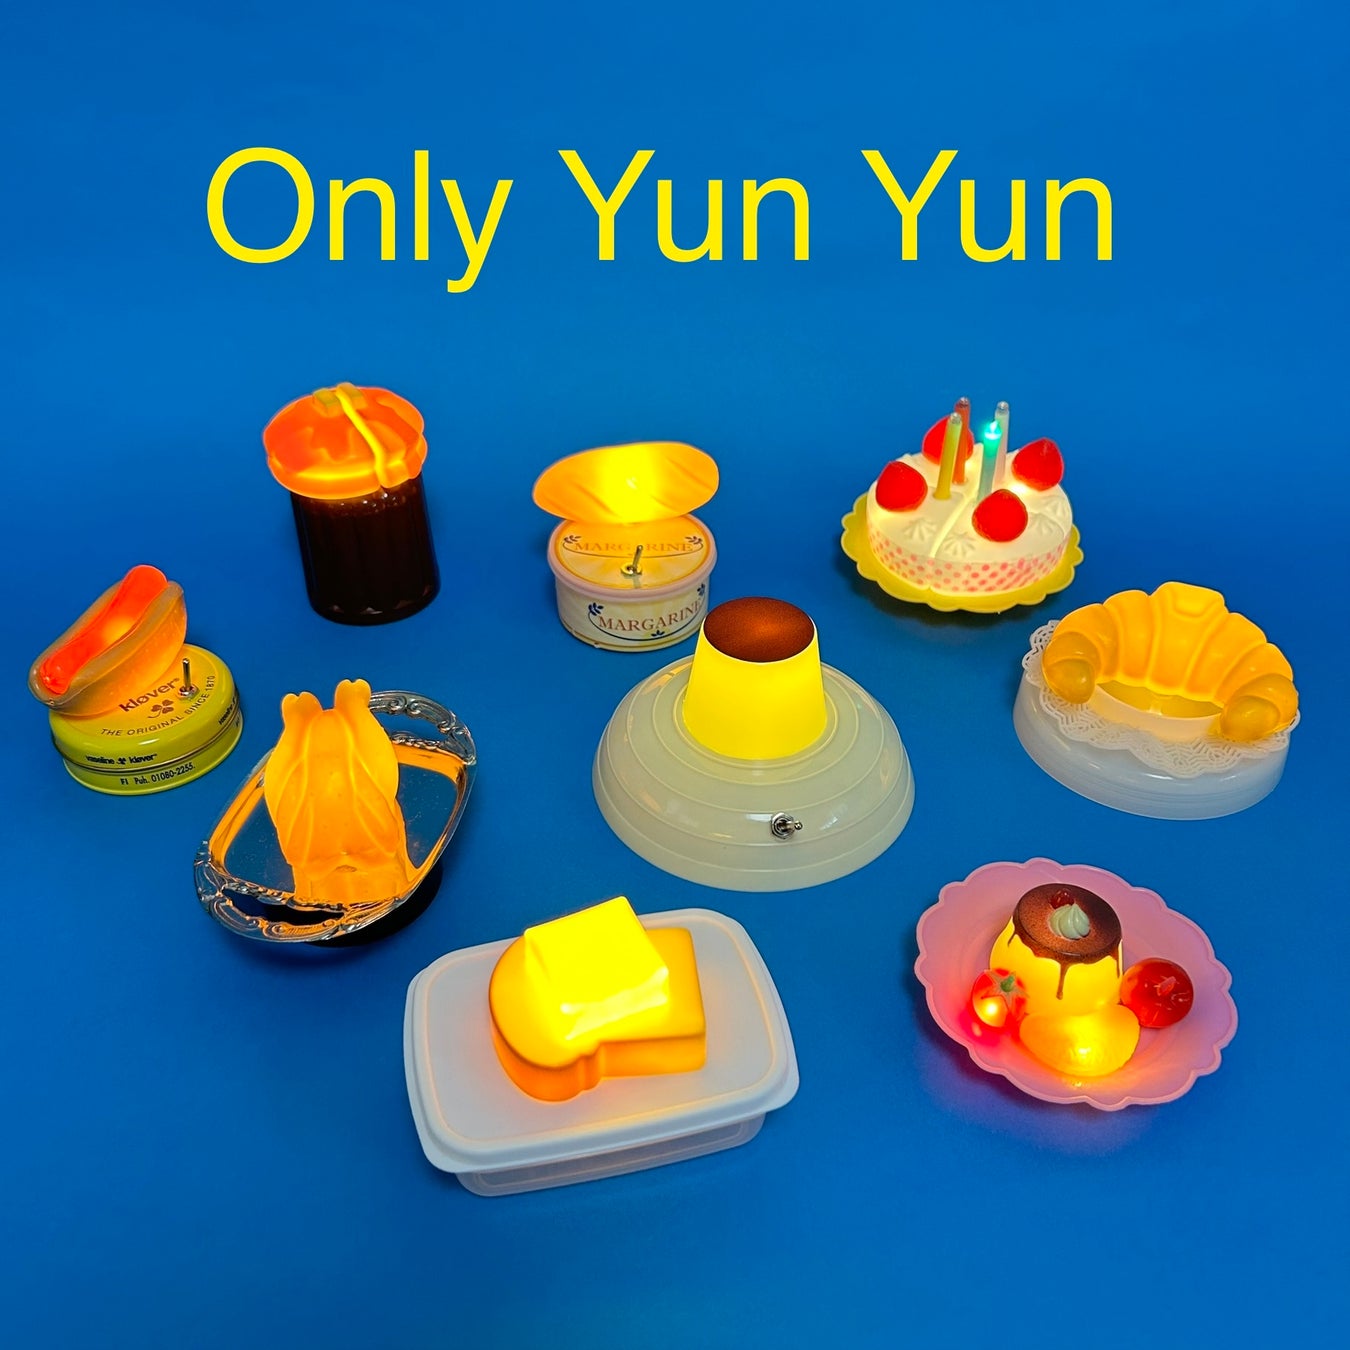 Only Yun Yun